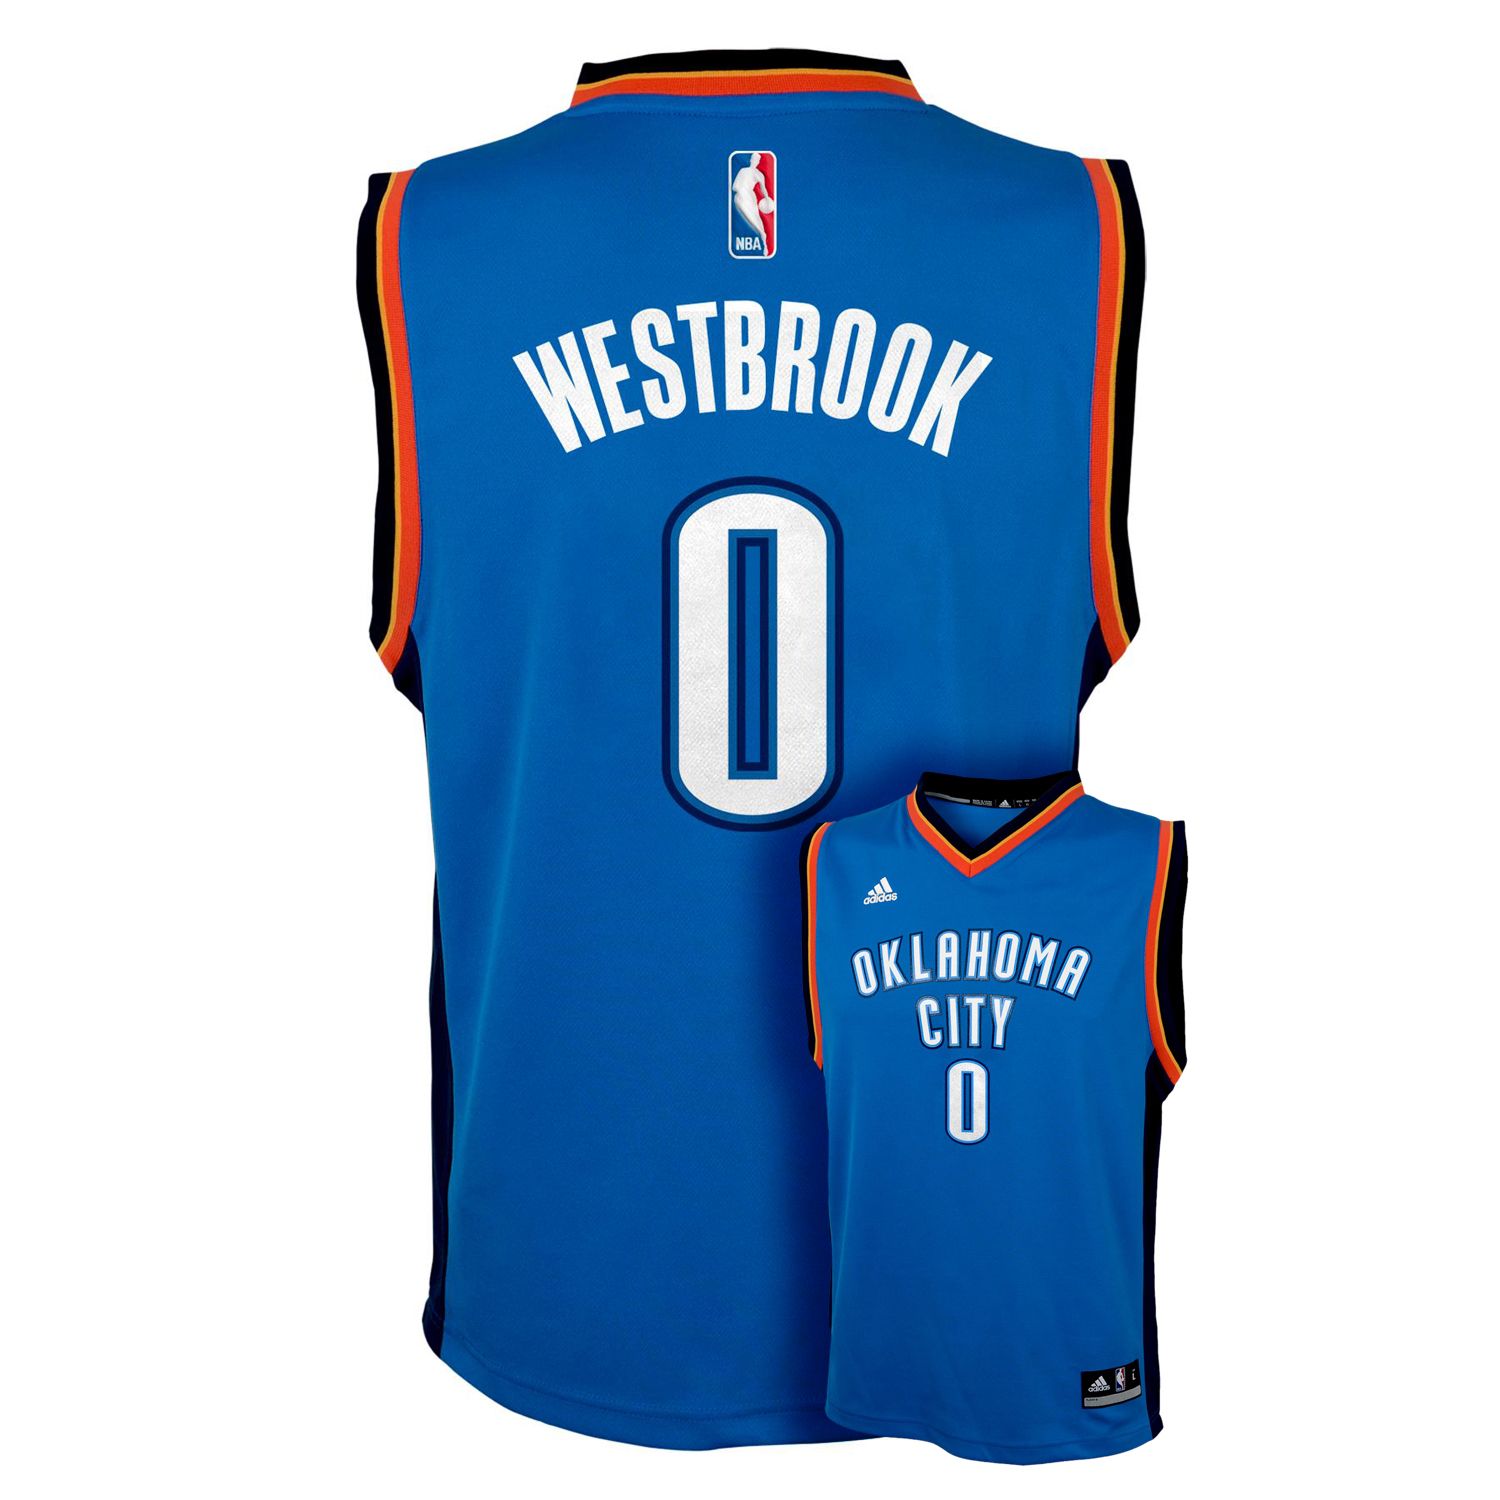 oklahoma city westbrook jersey